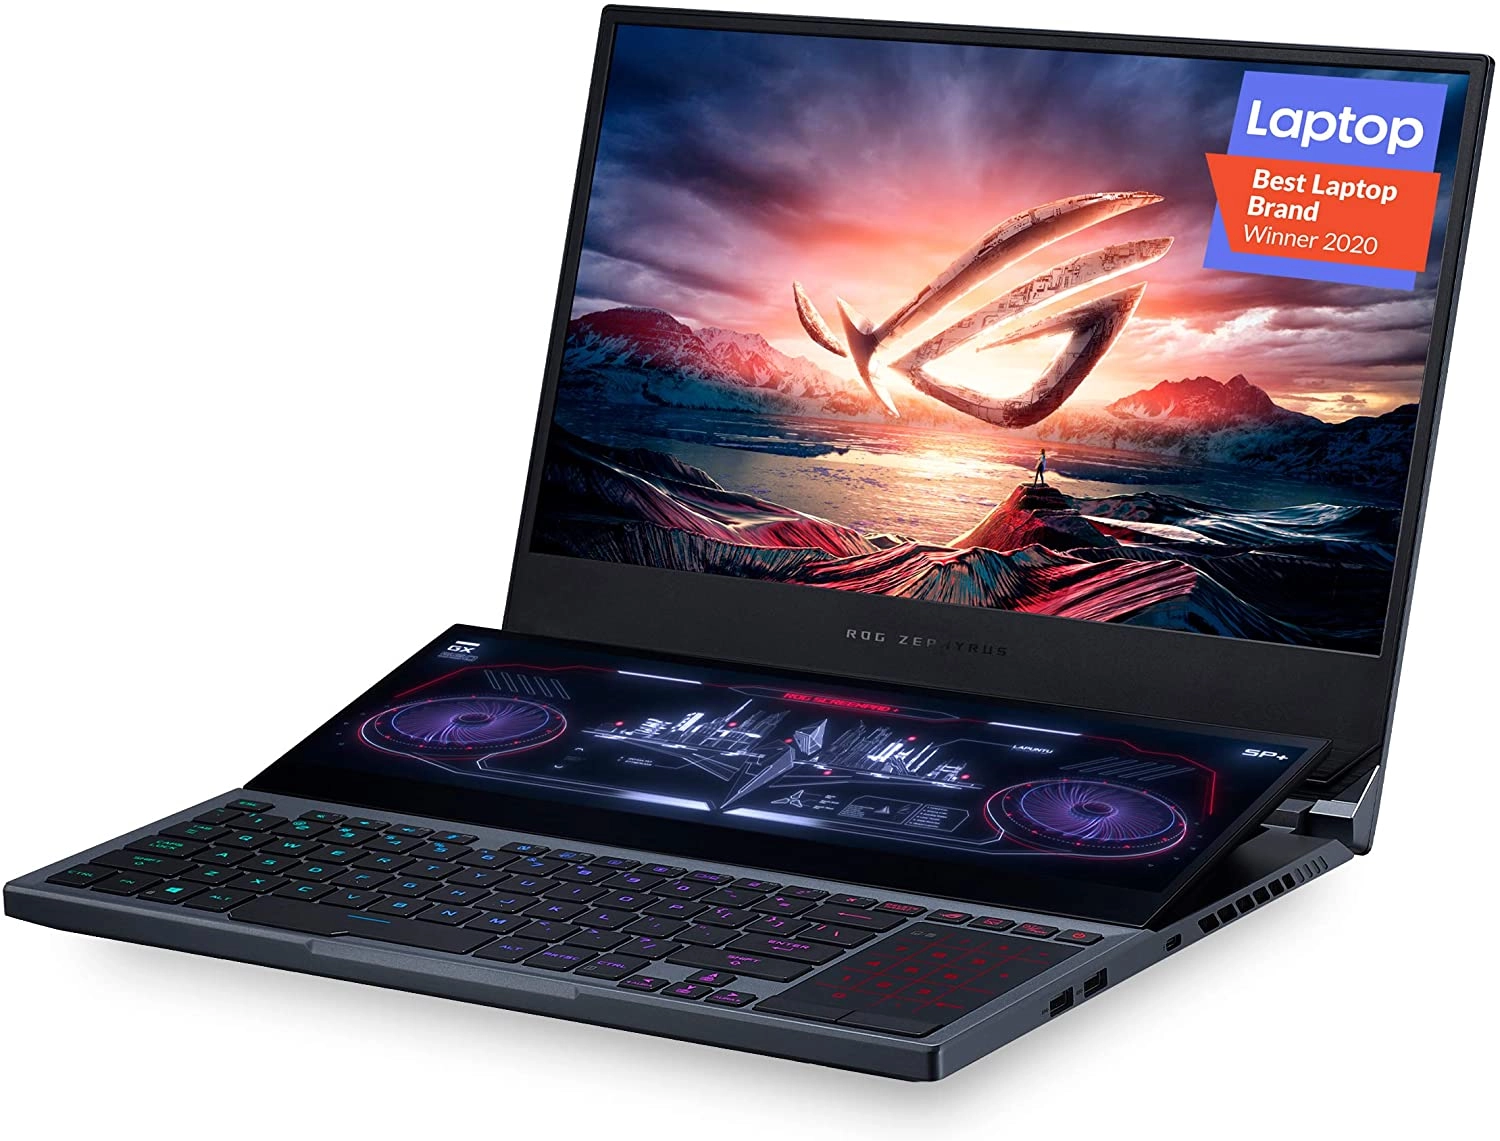 Asus ROG Zephyrus Duo laptop image